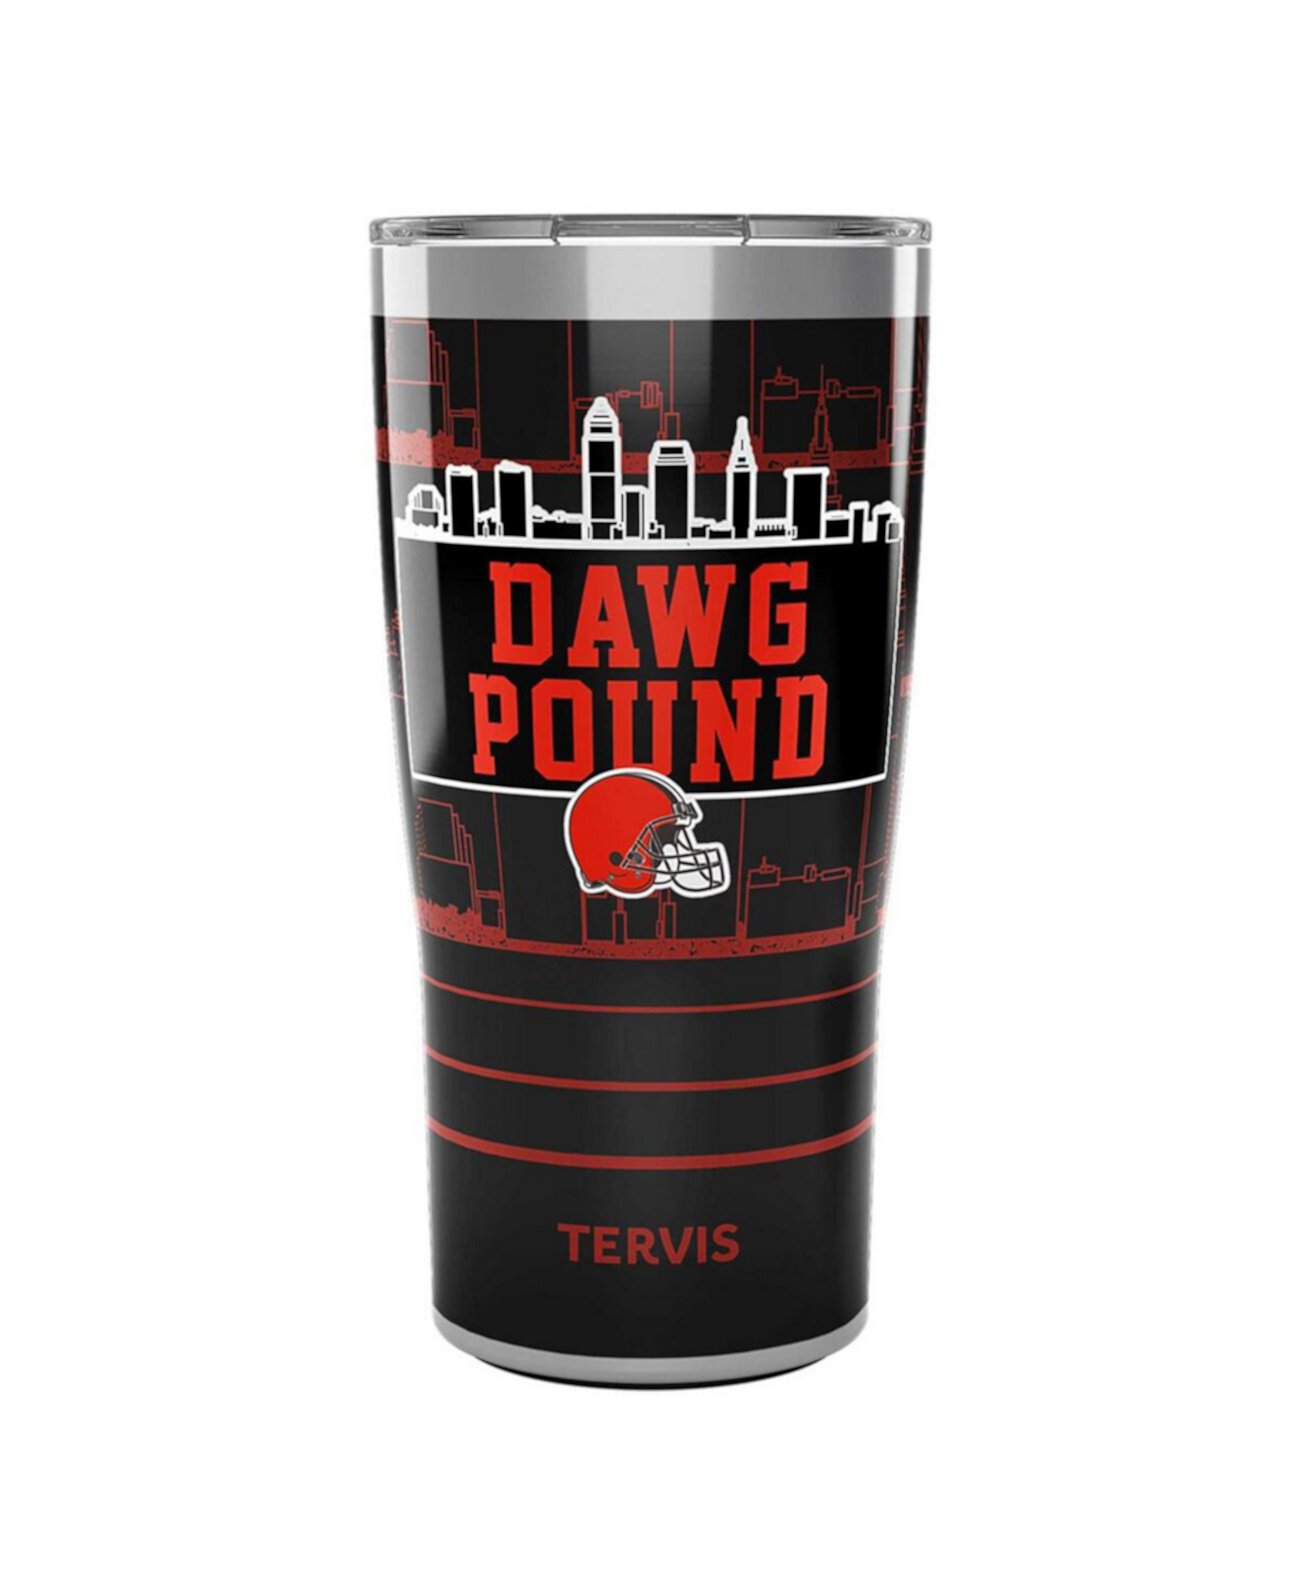 Cleveland Browns Стакан из нержавеющей стали с крышкой и крышкой на 20 унций Dawg Pound Tervis